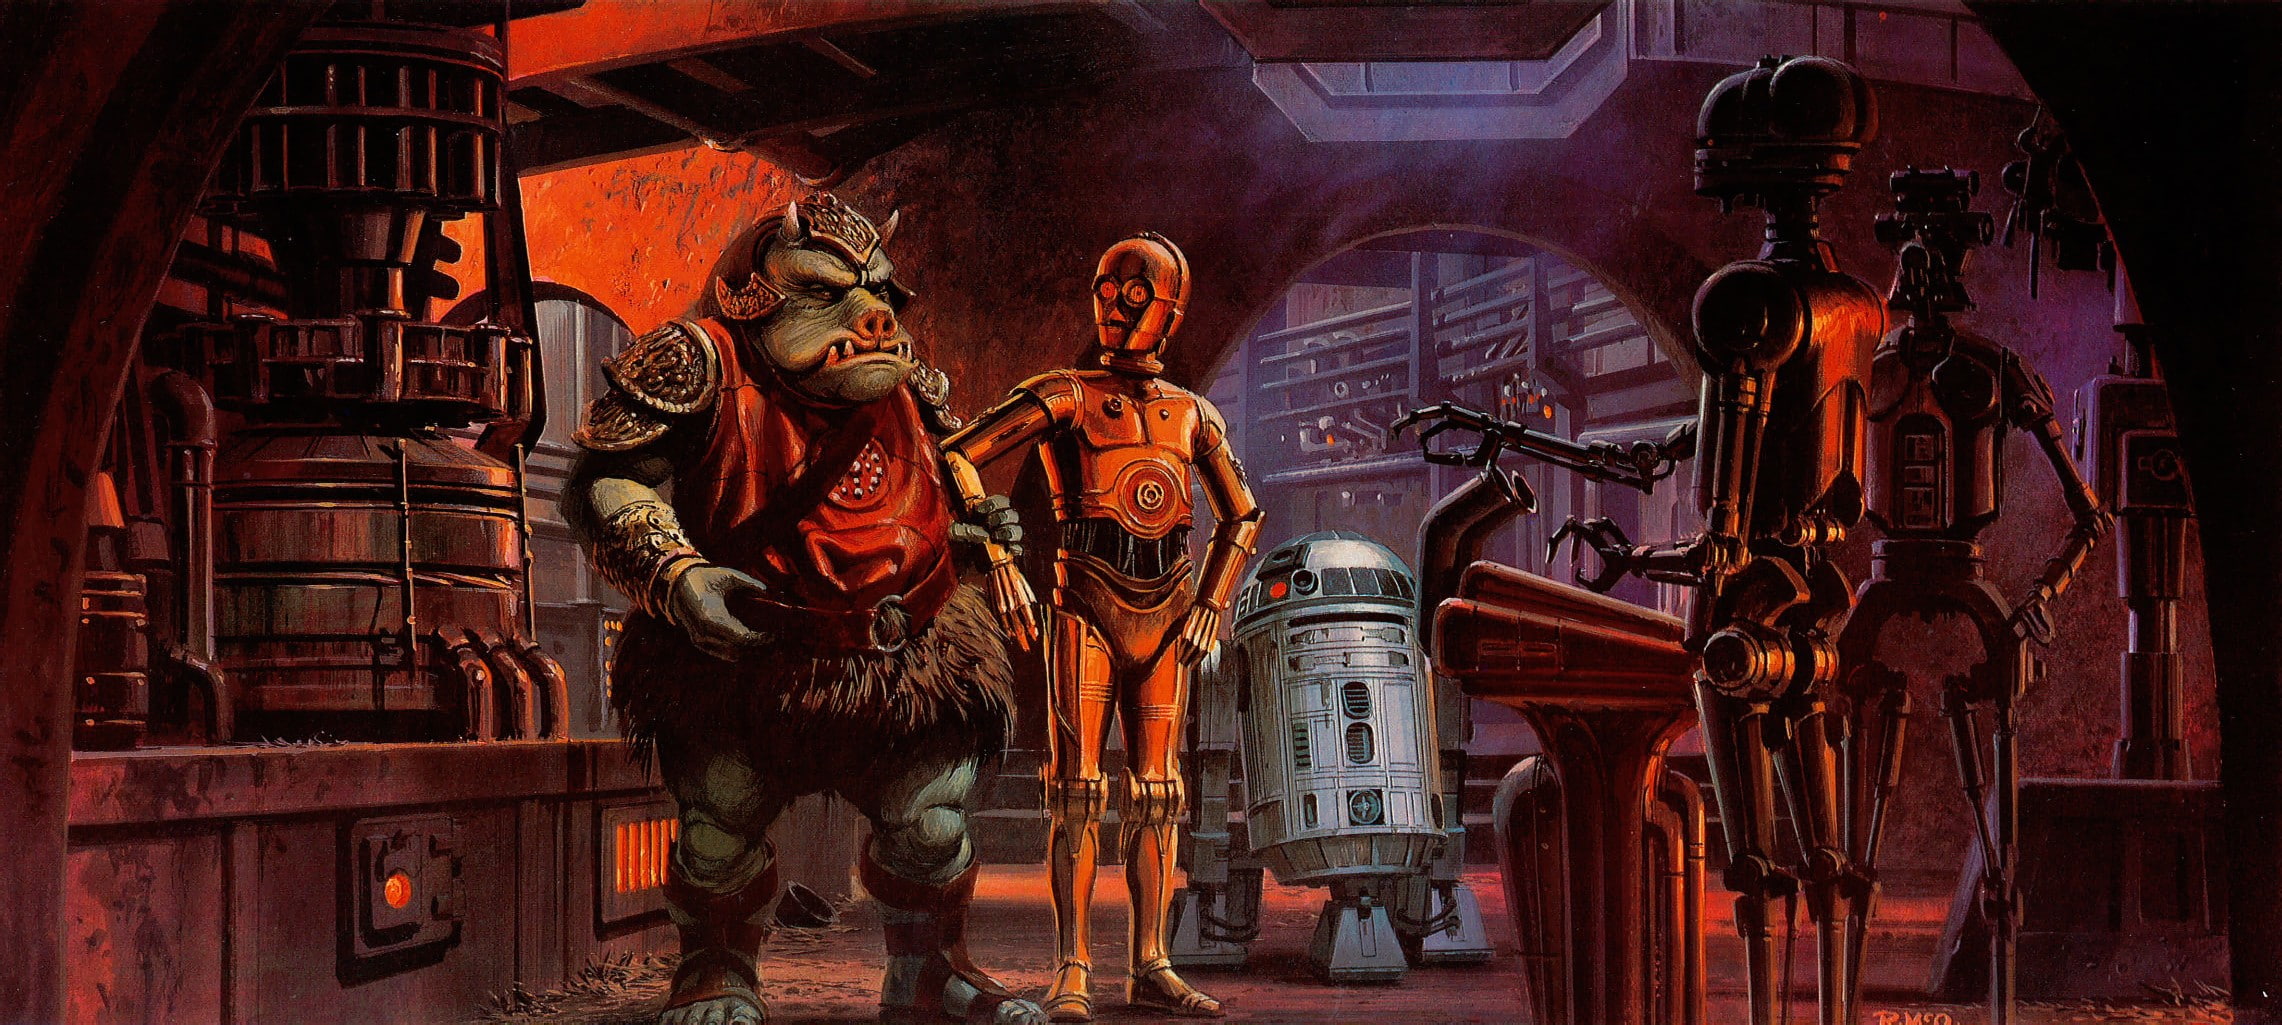 Star Wars, Artwork, C-3PO, Science Fiction, star wars characters illustration